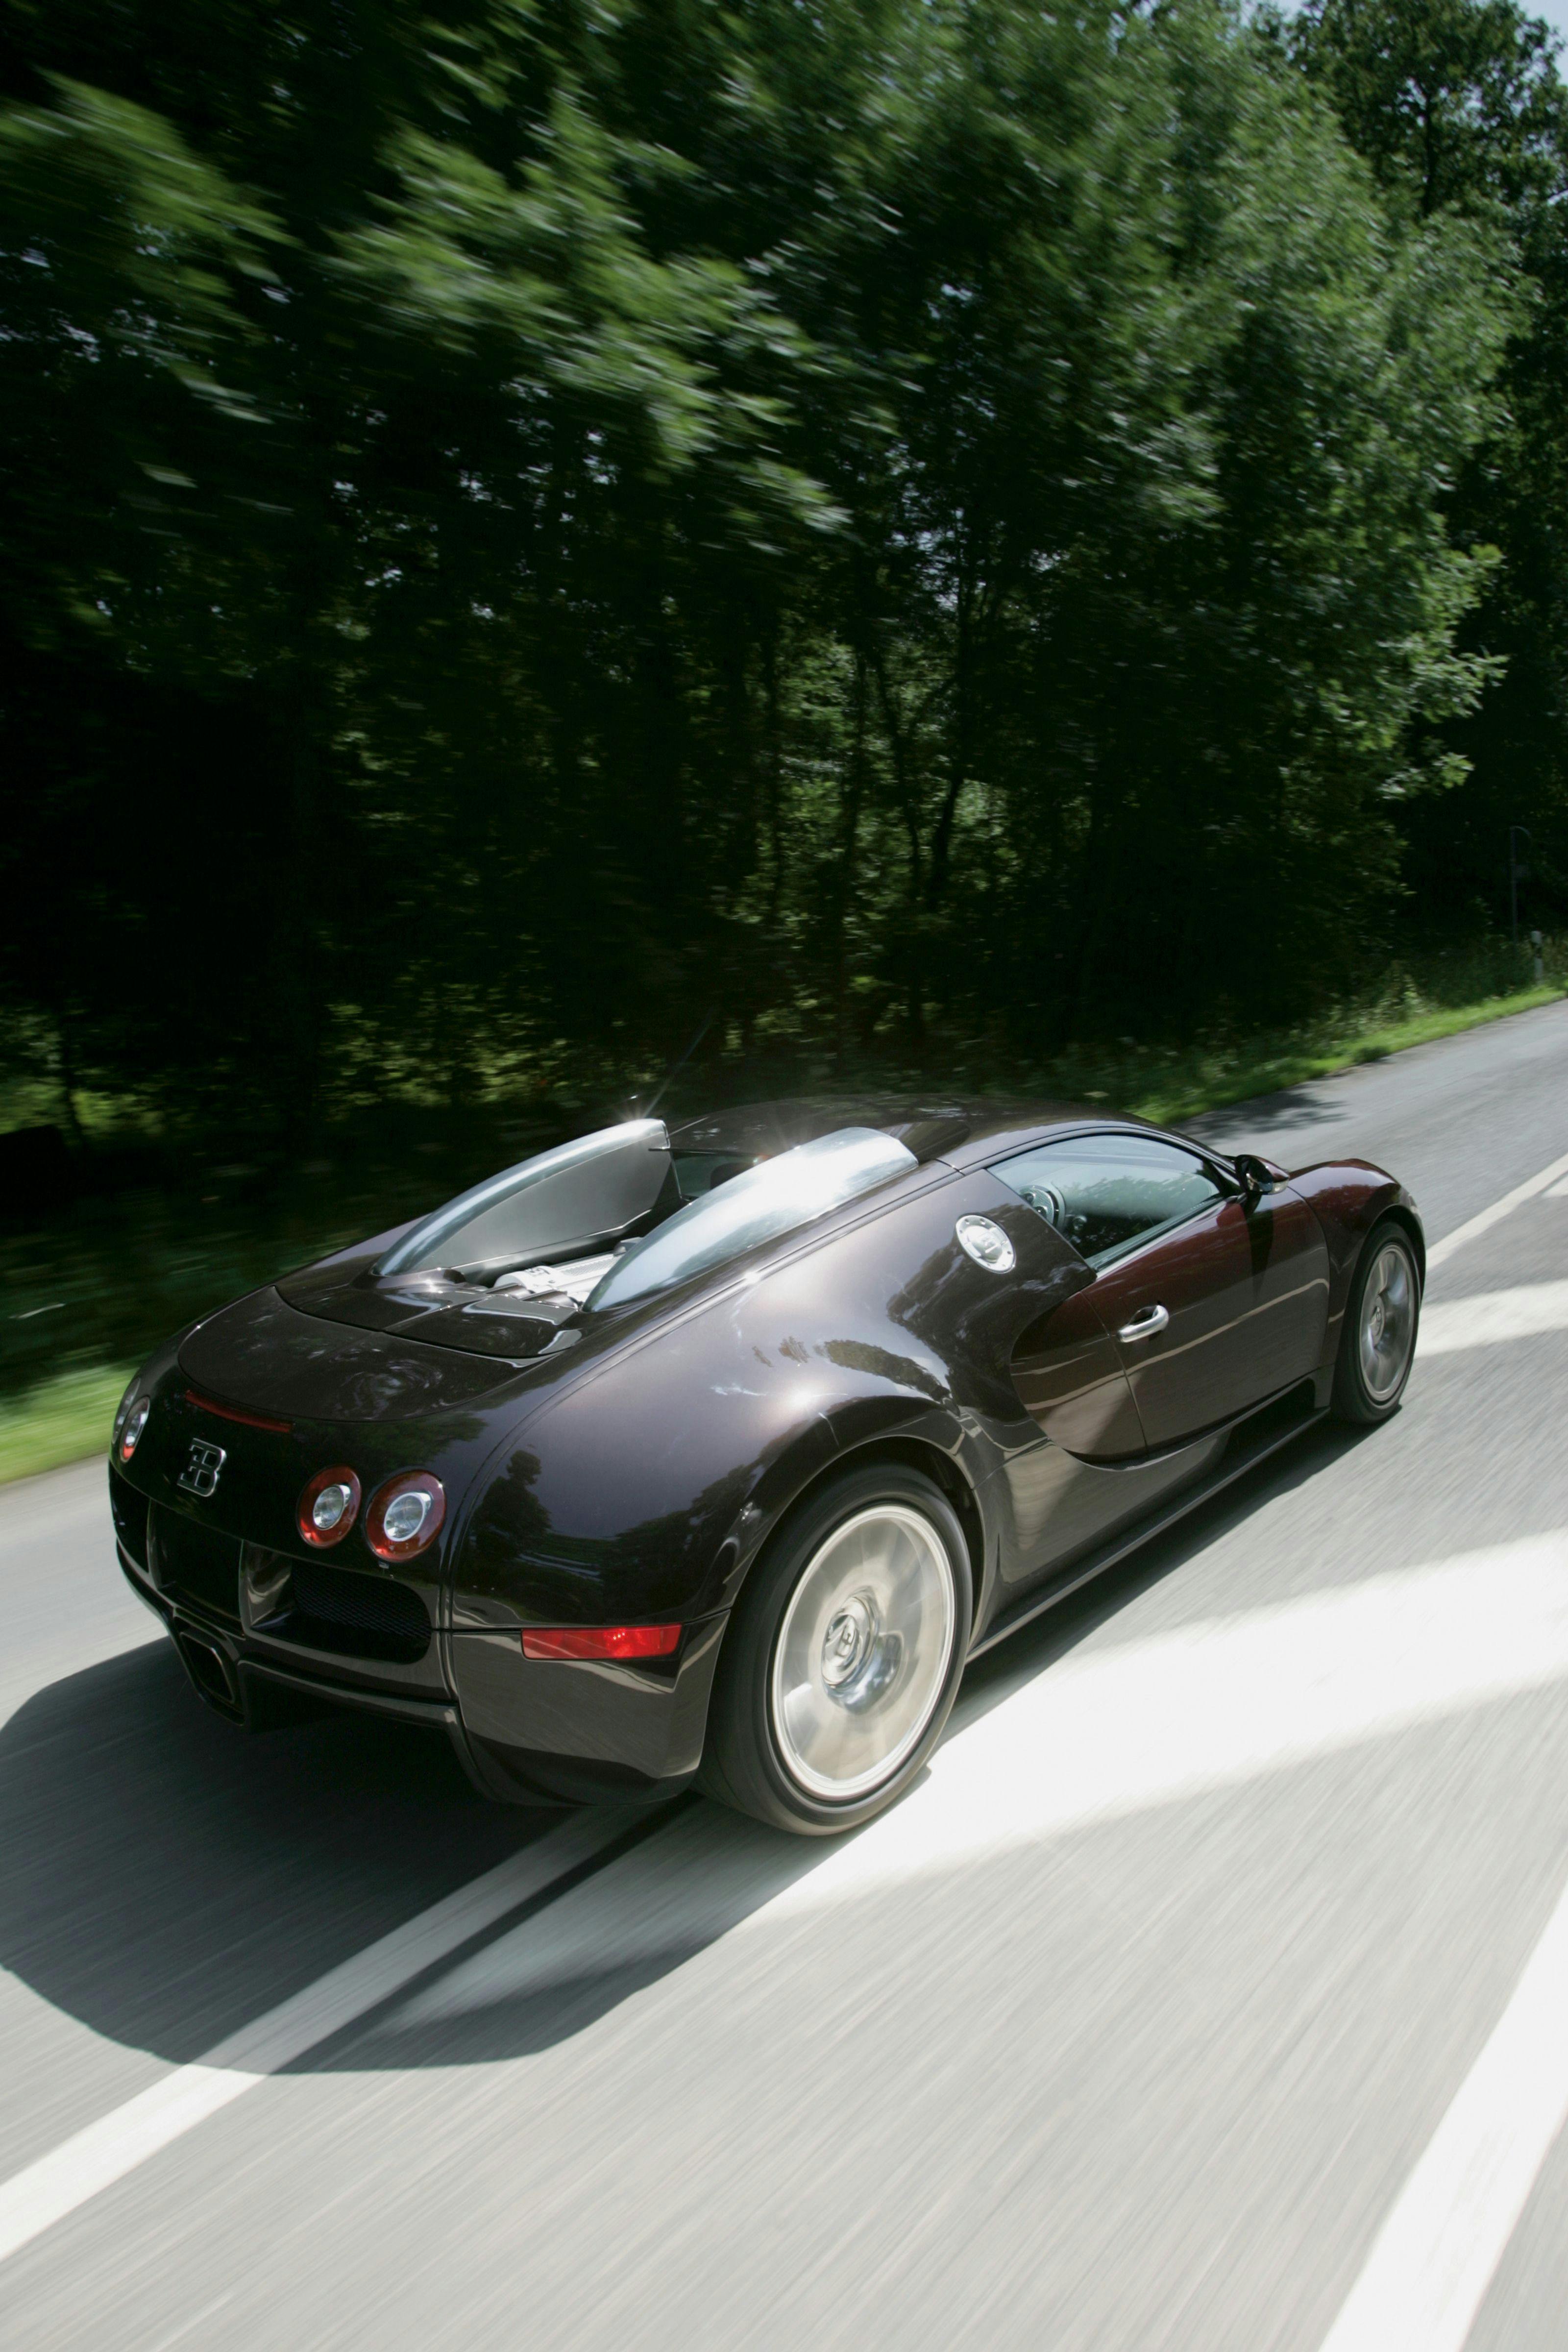 La Bugatti Veyron sur les traces de la Targa Florio